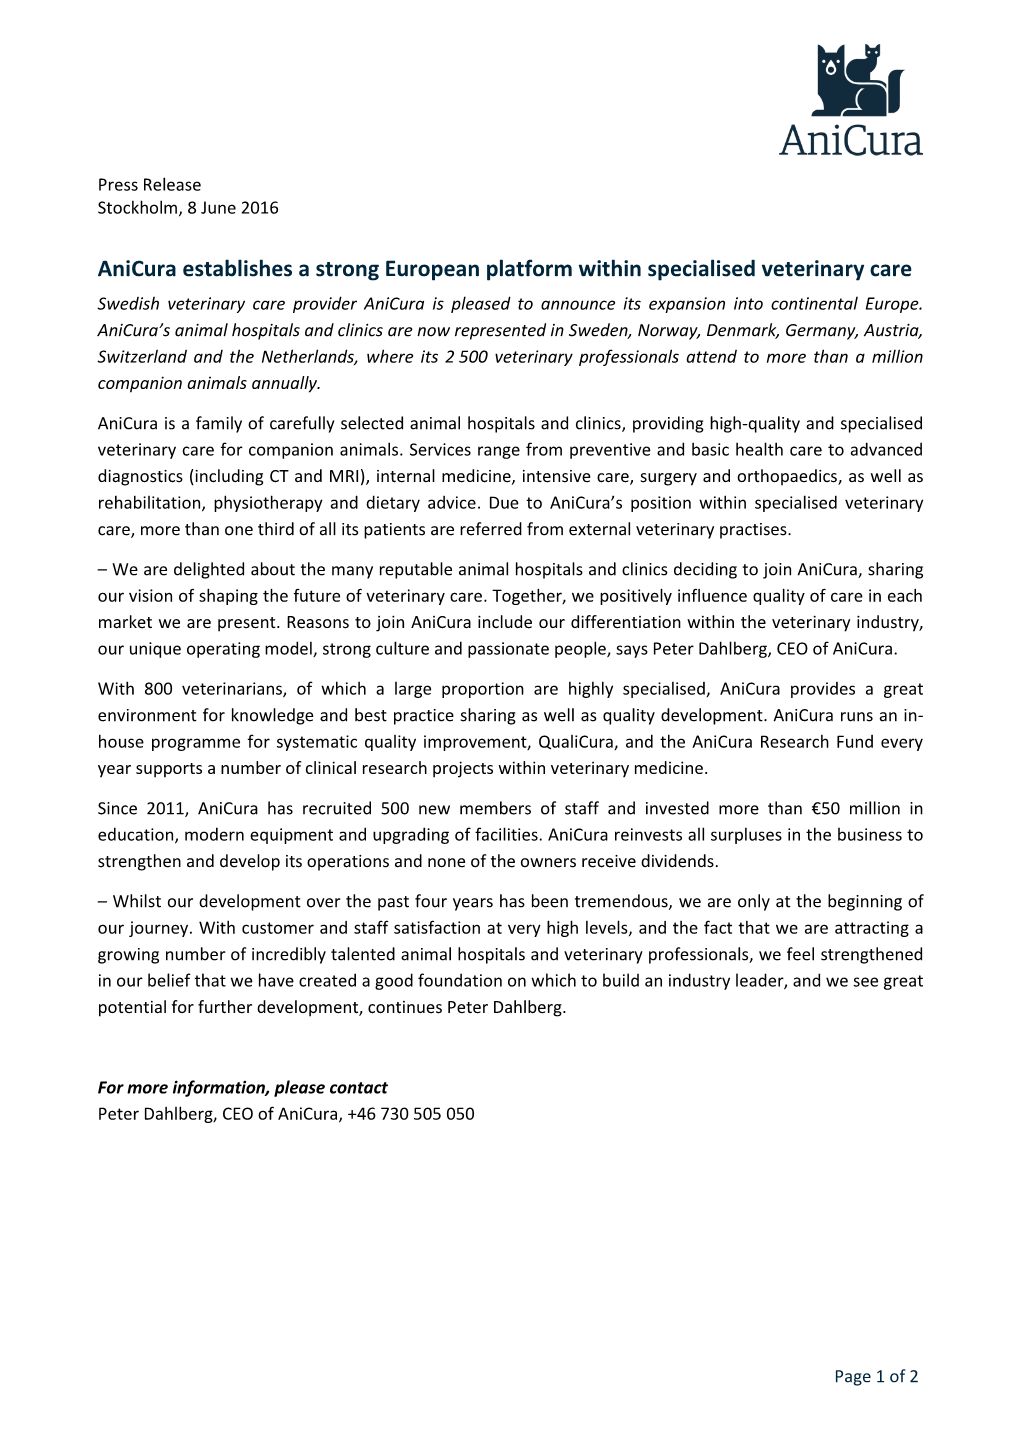 Anicura Establishes a Strong European Platform Within